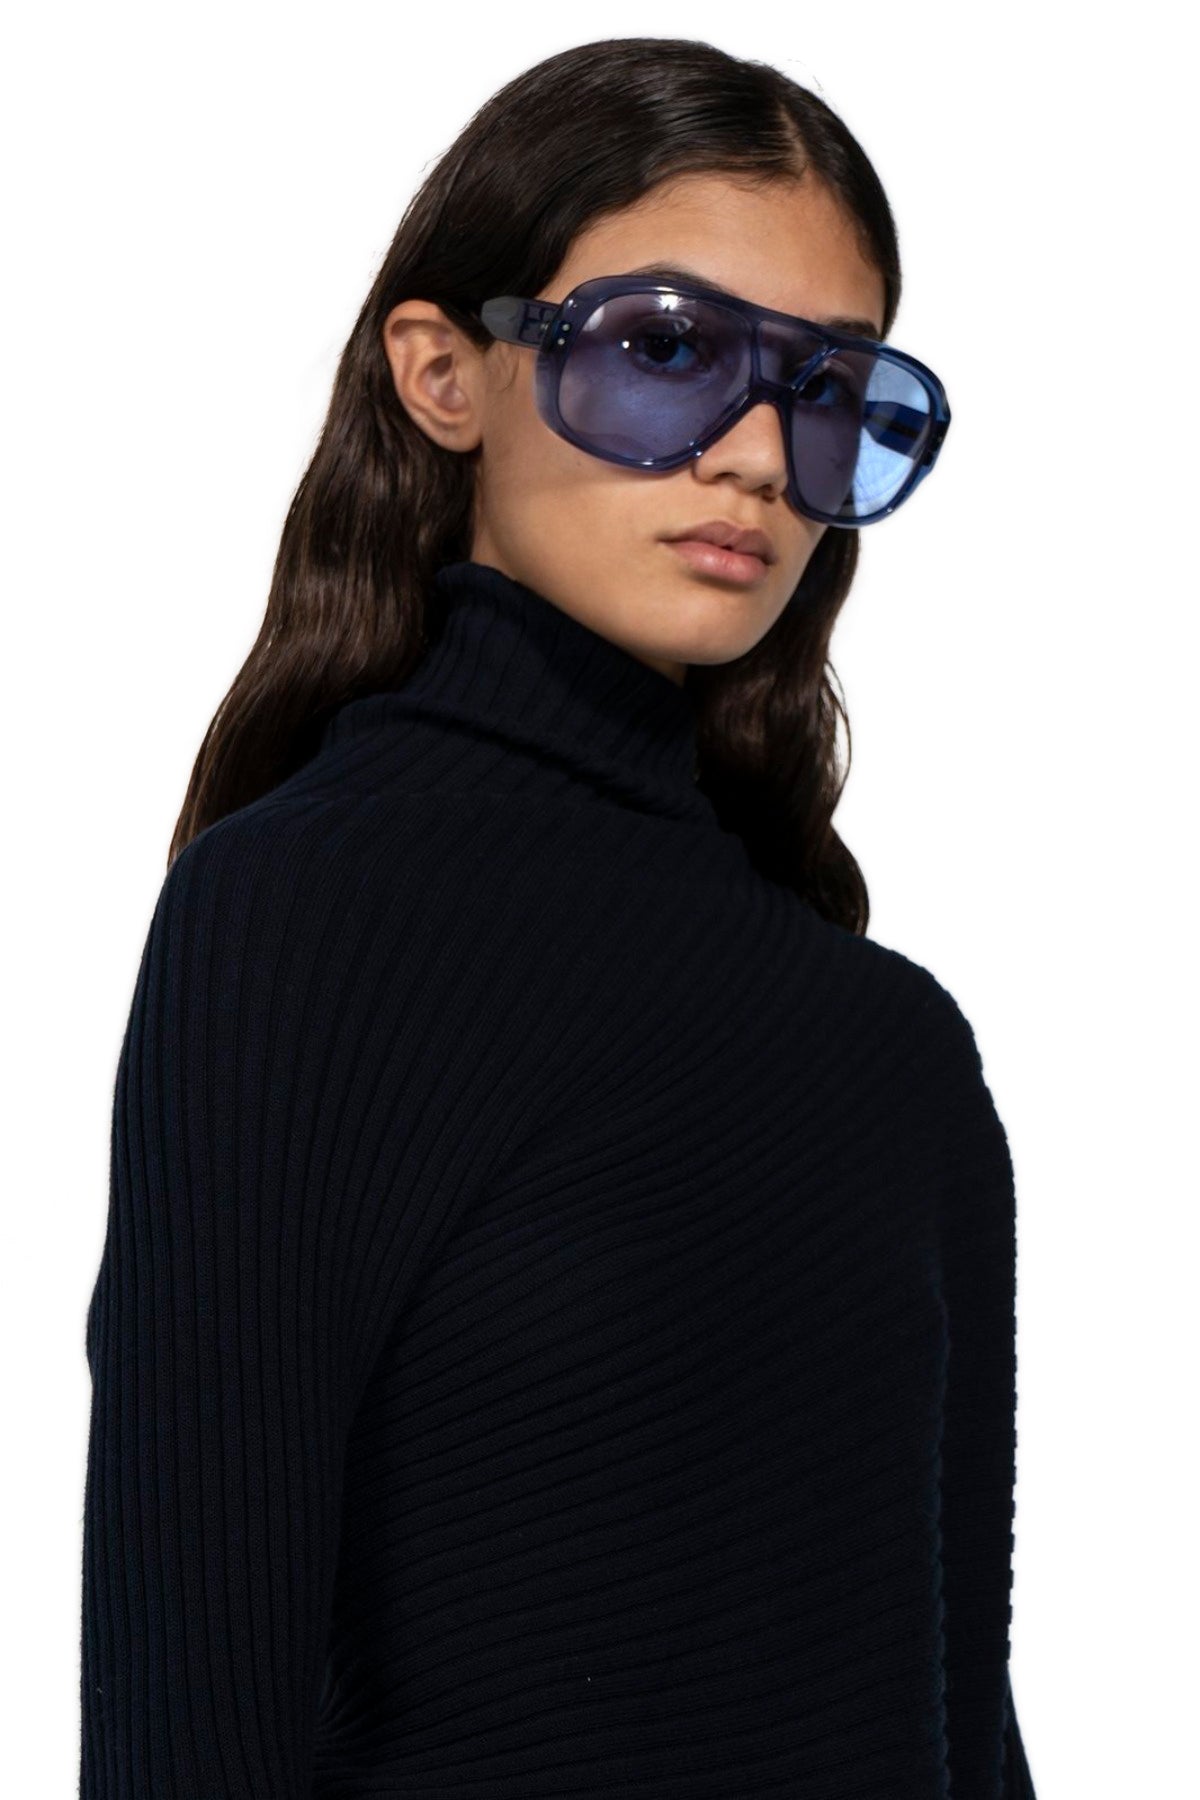 Men's Levi's® 58mm Fashion Aviator Sunglasses